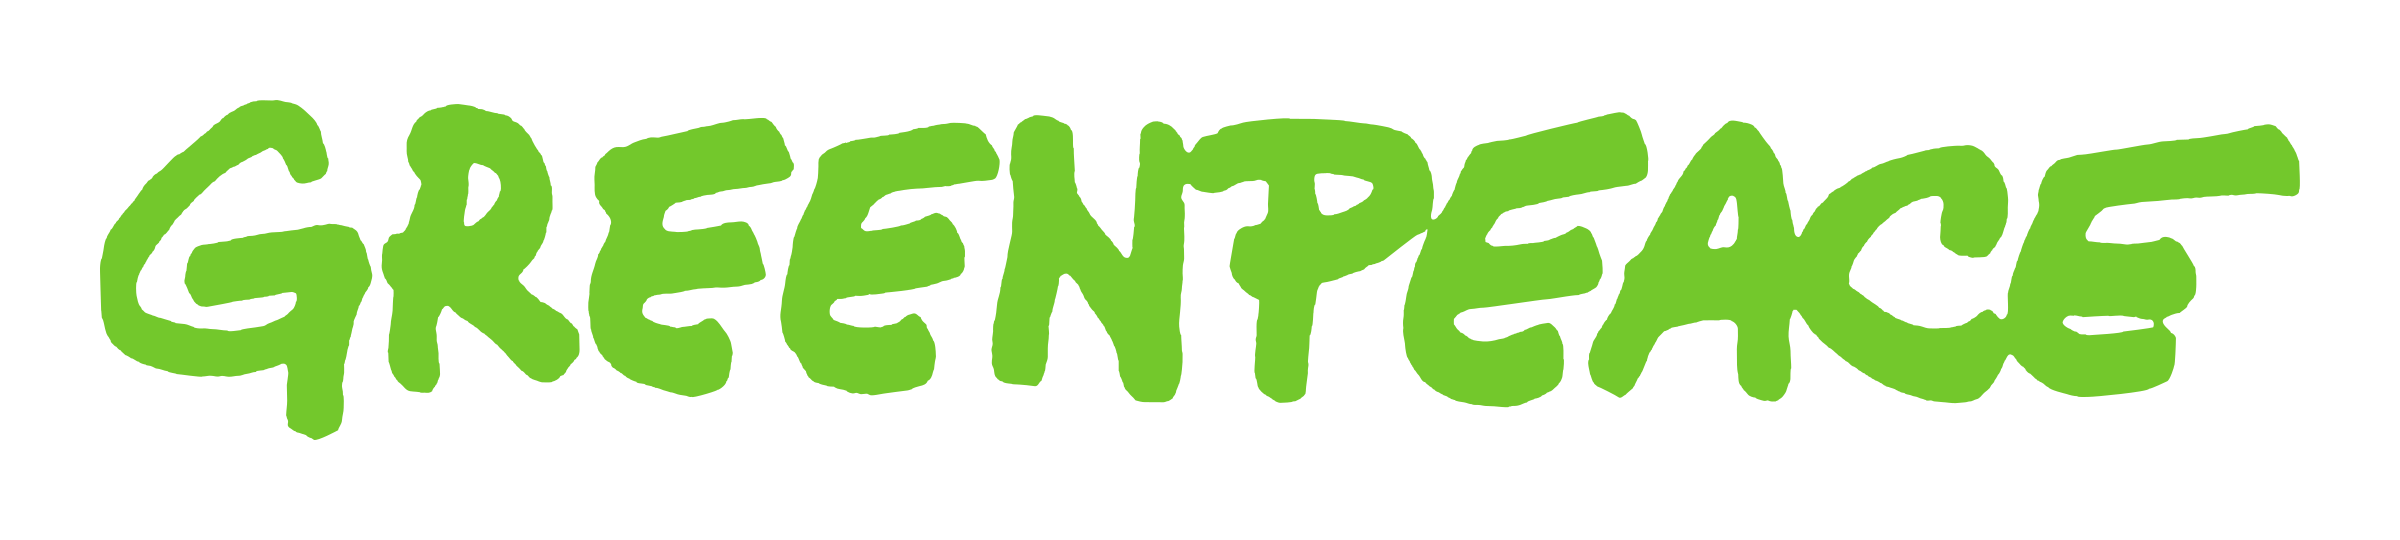 greenpeace-logo-png-transparent.png